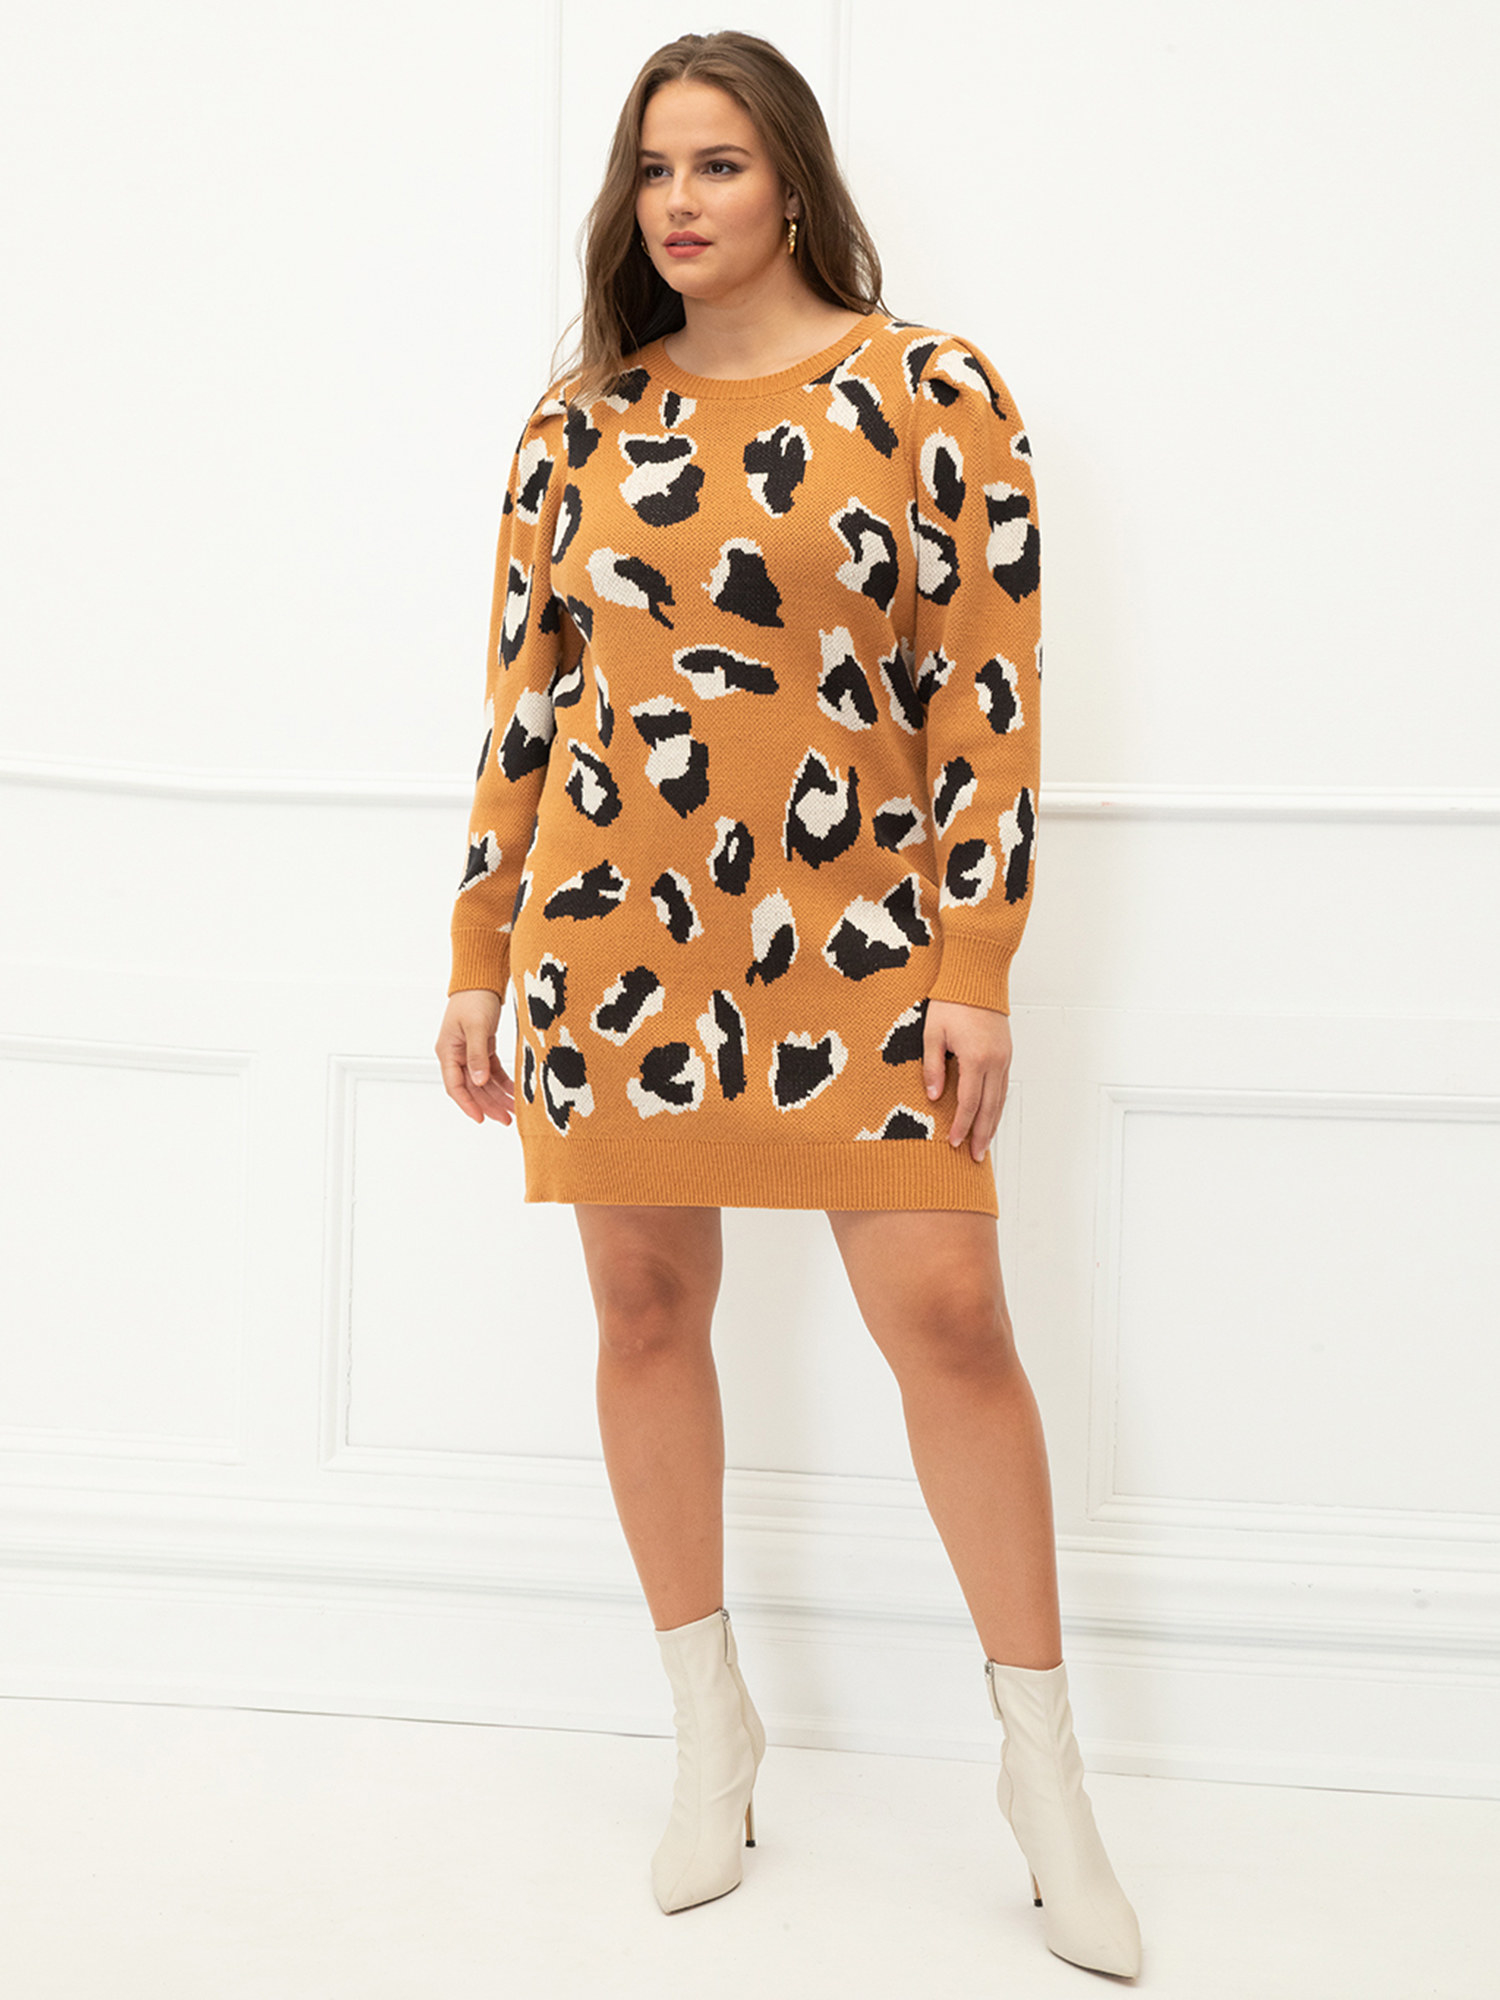 model wearing the cheetah print sweater dress